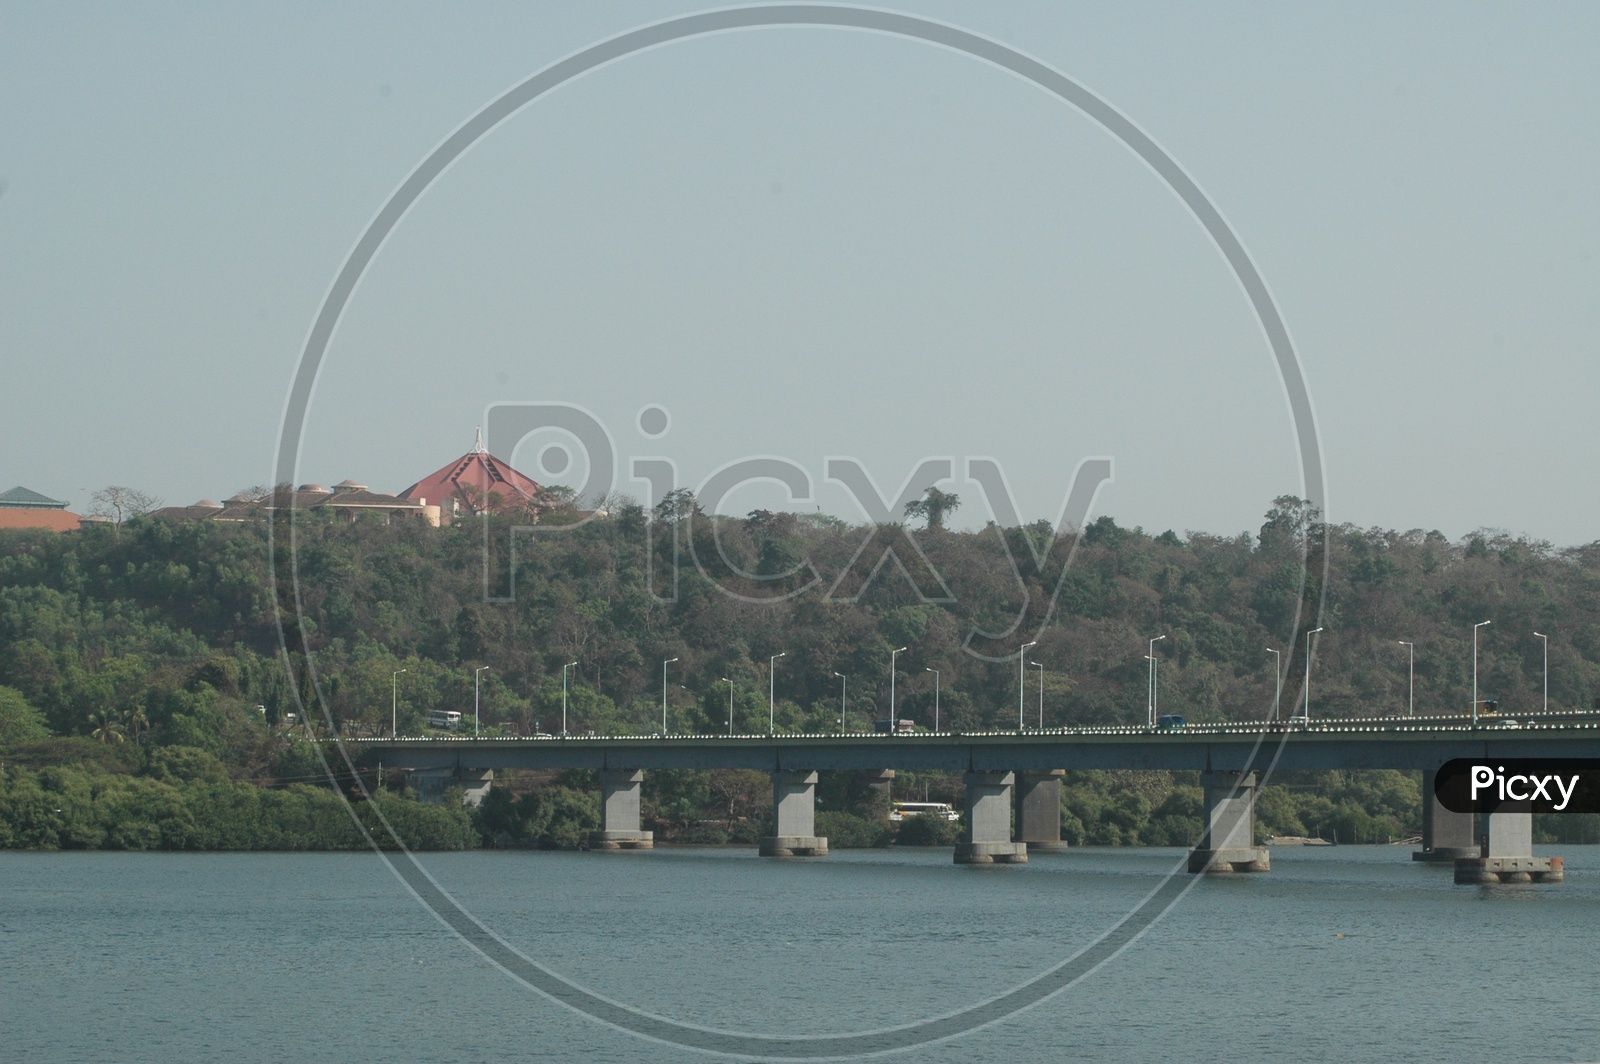 Mandovi bridges over the Mandovi River